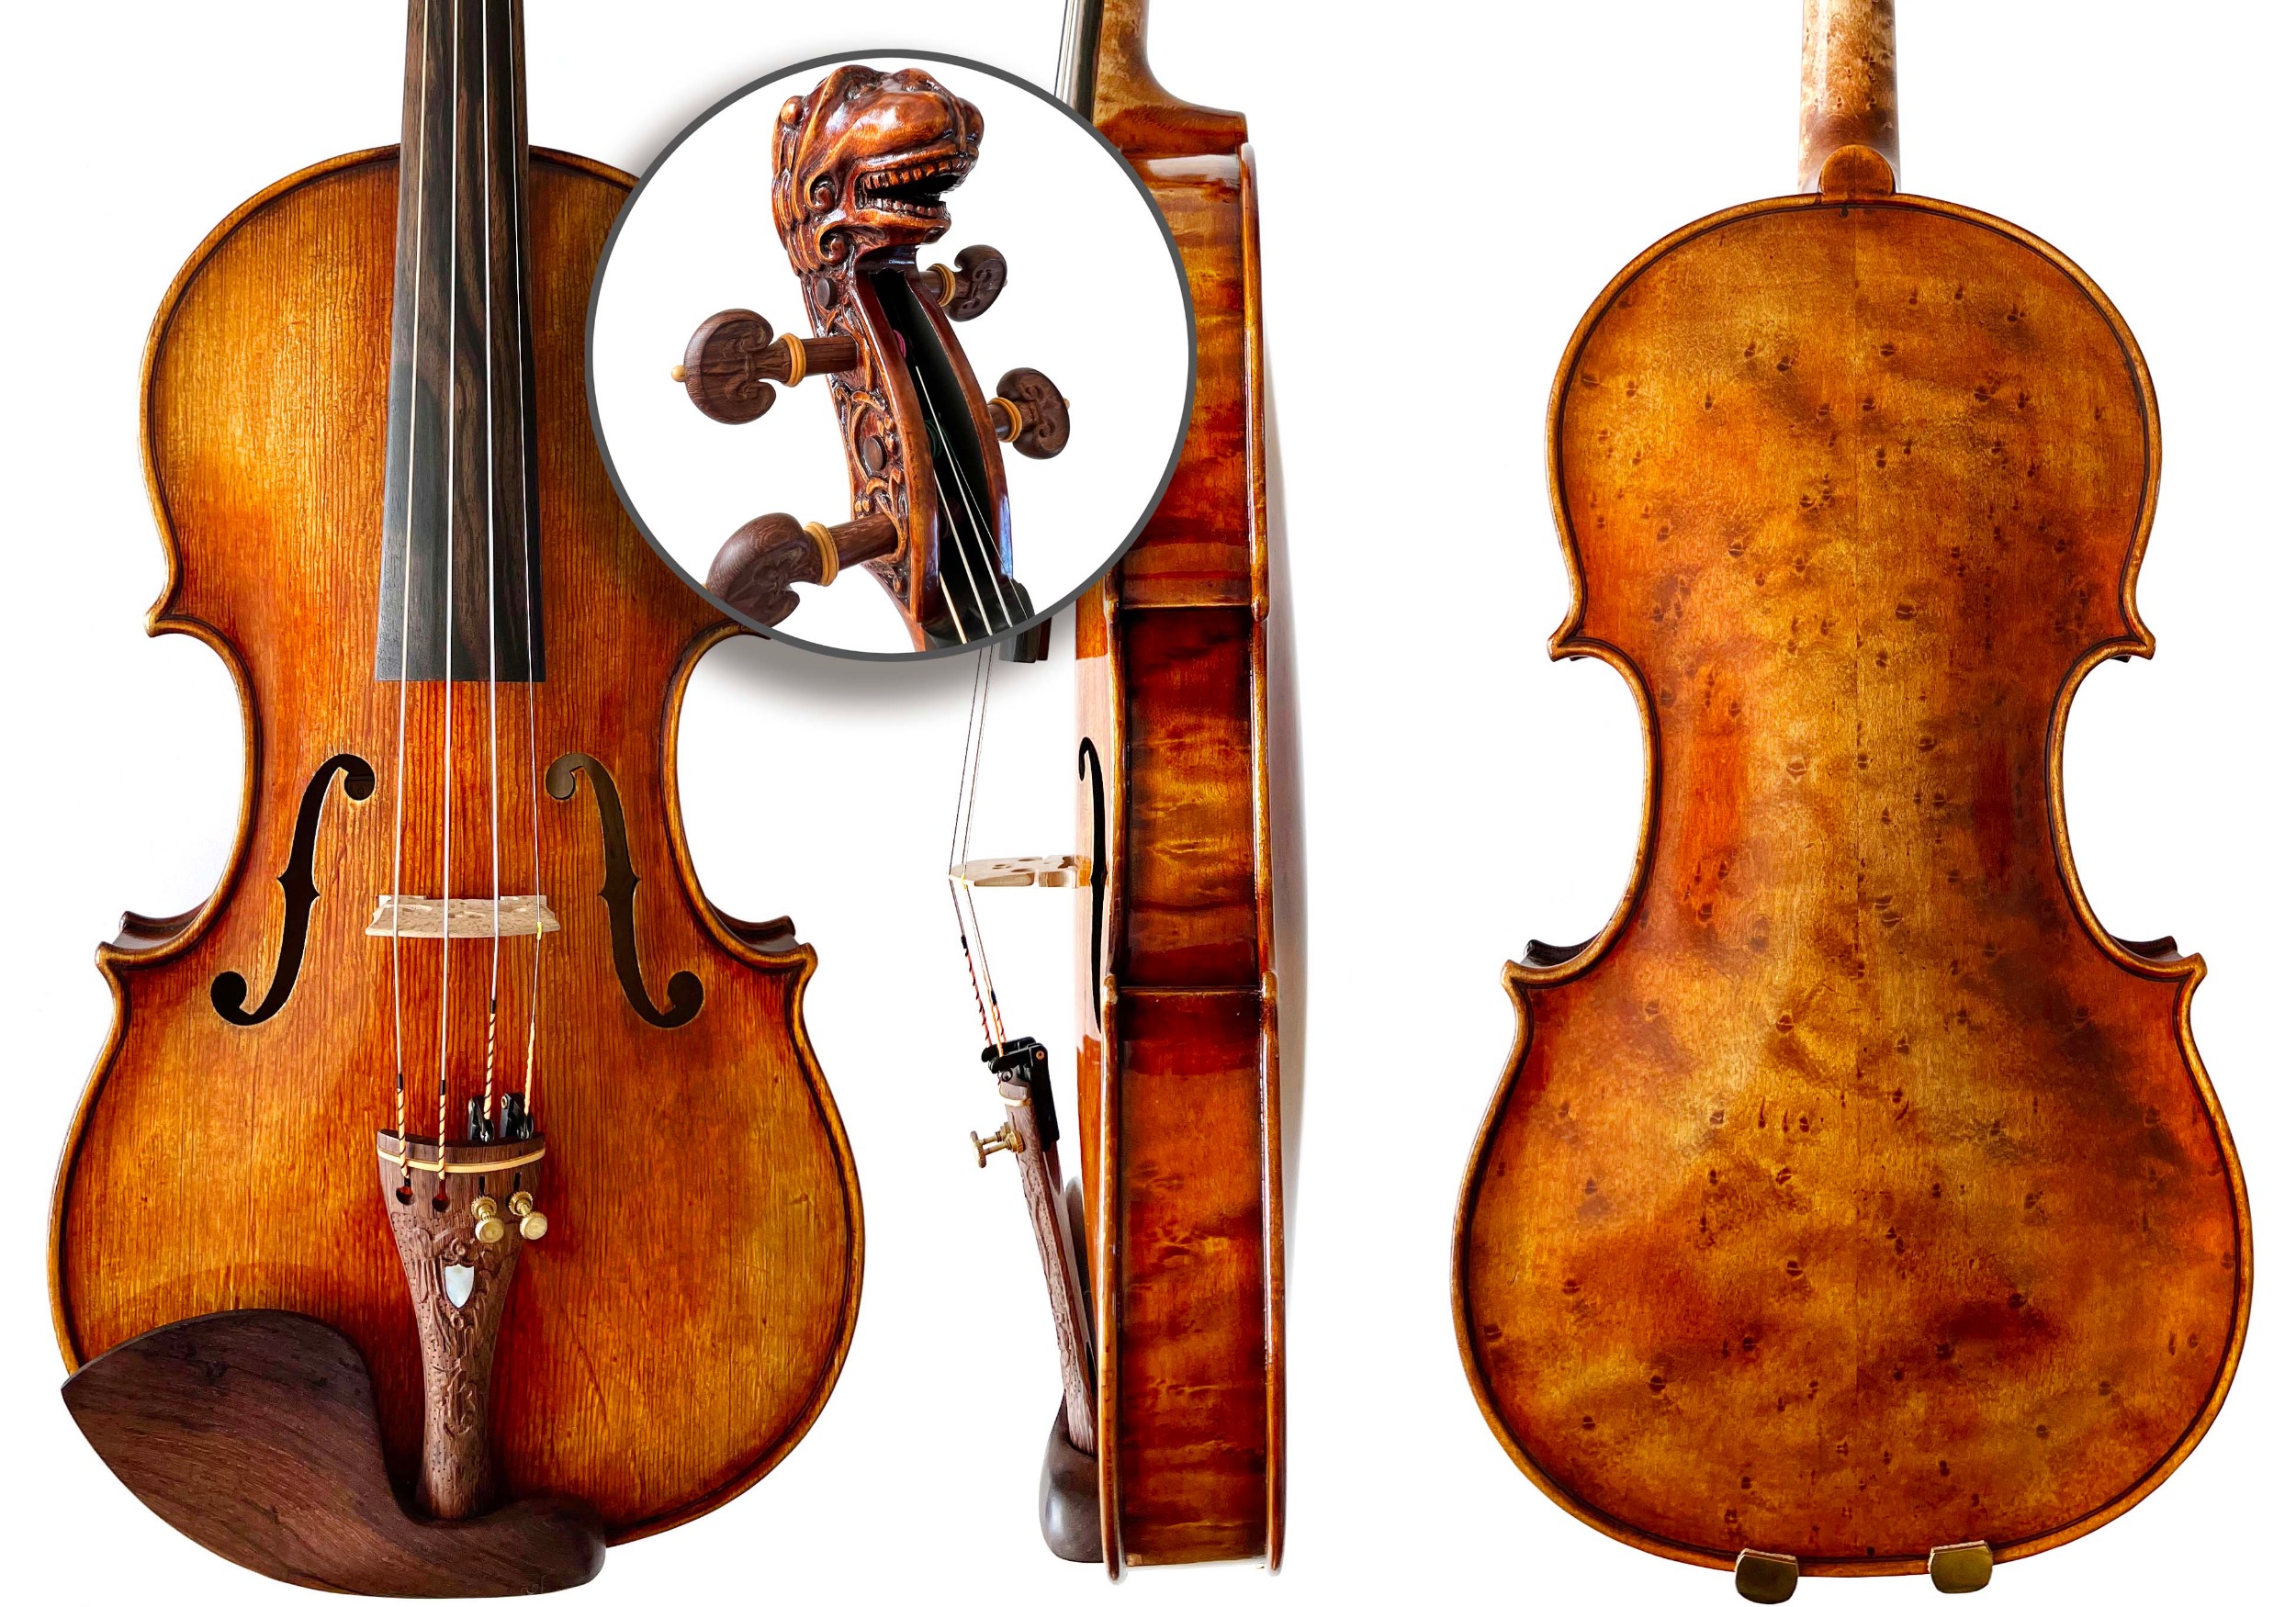 Kowalski dragon head violin front, side and back